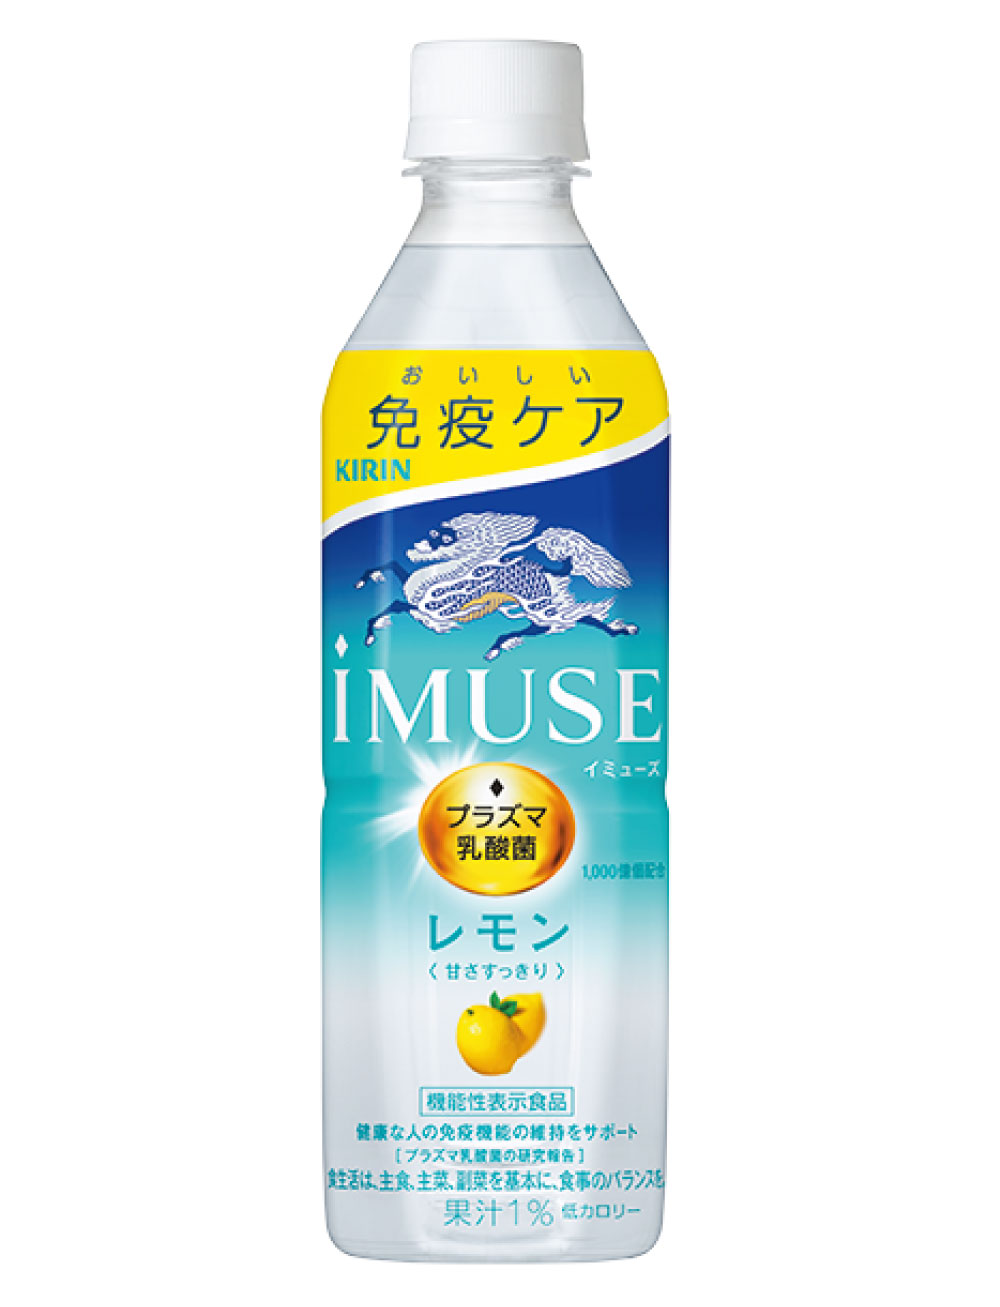 KIRIN iMUSE レモン 果汁1%